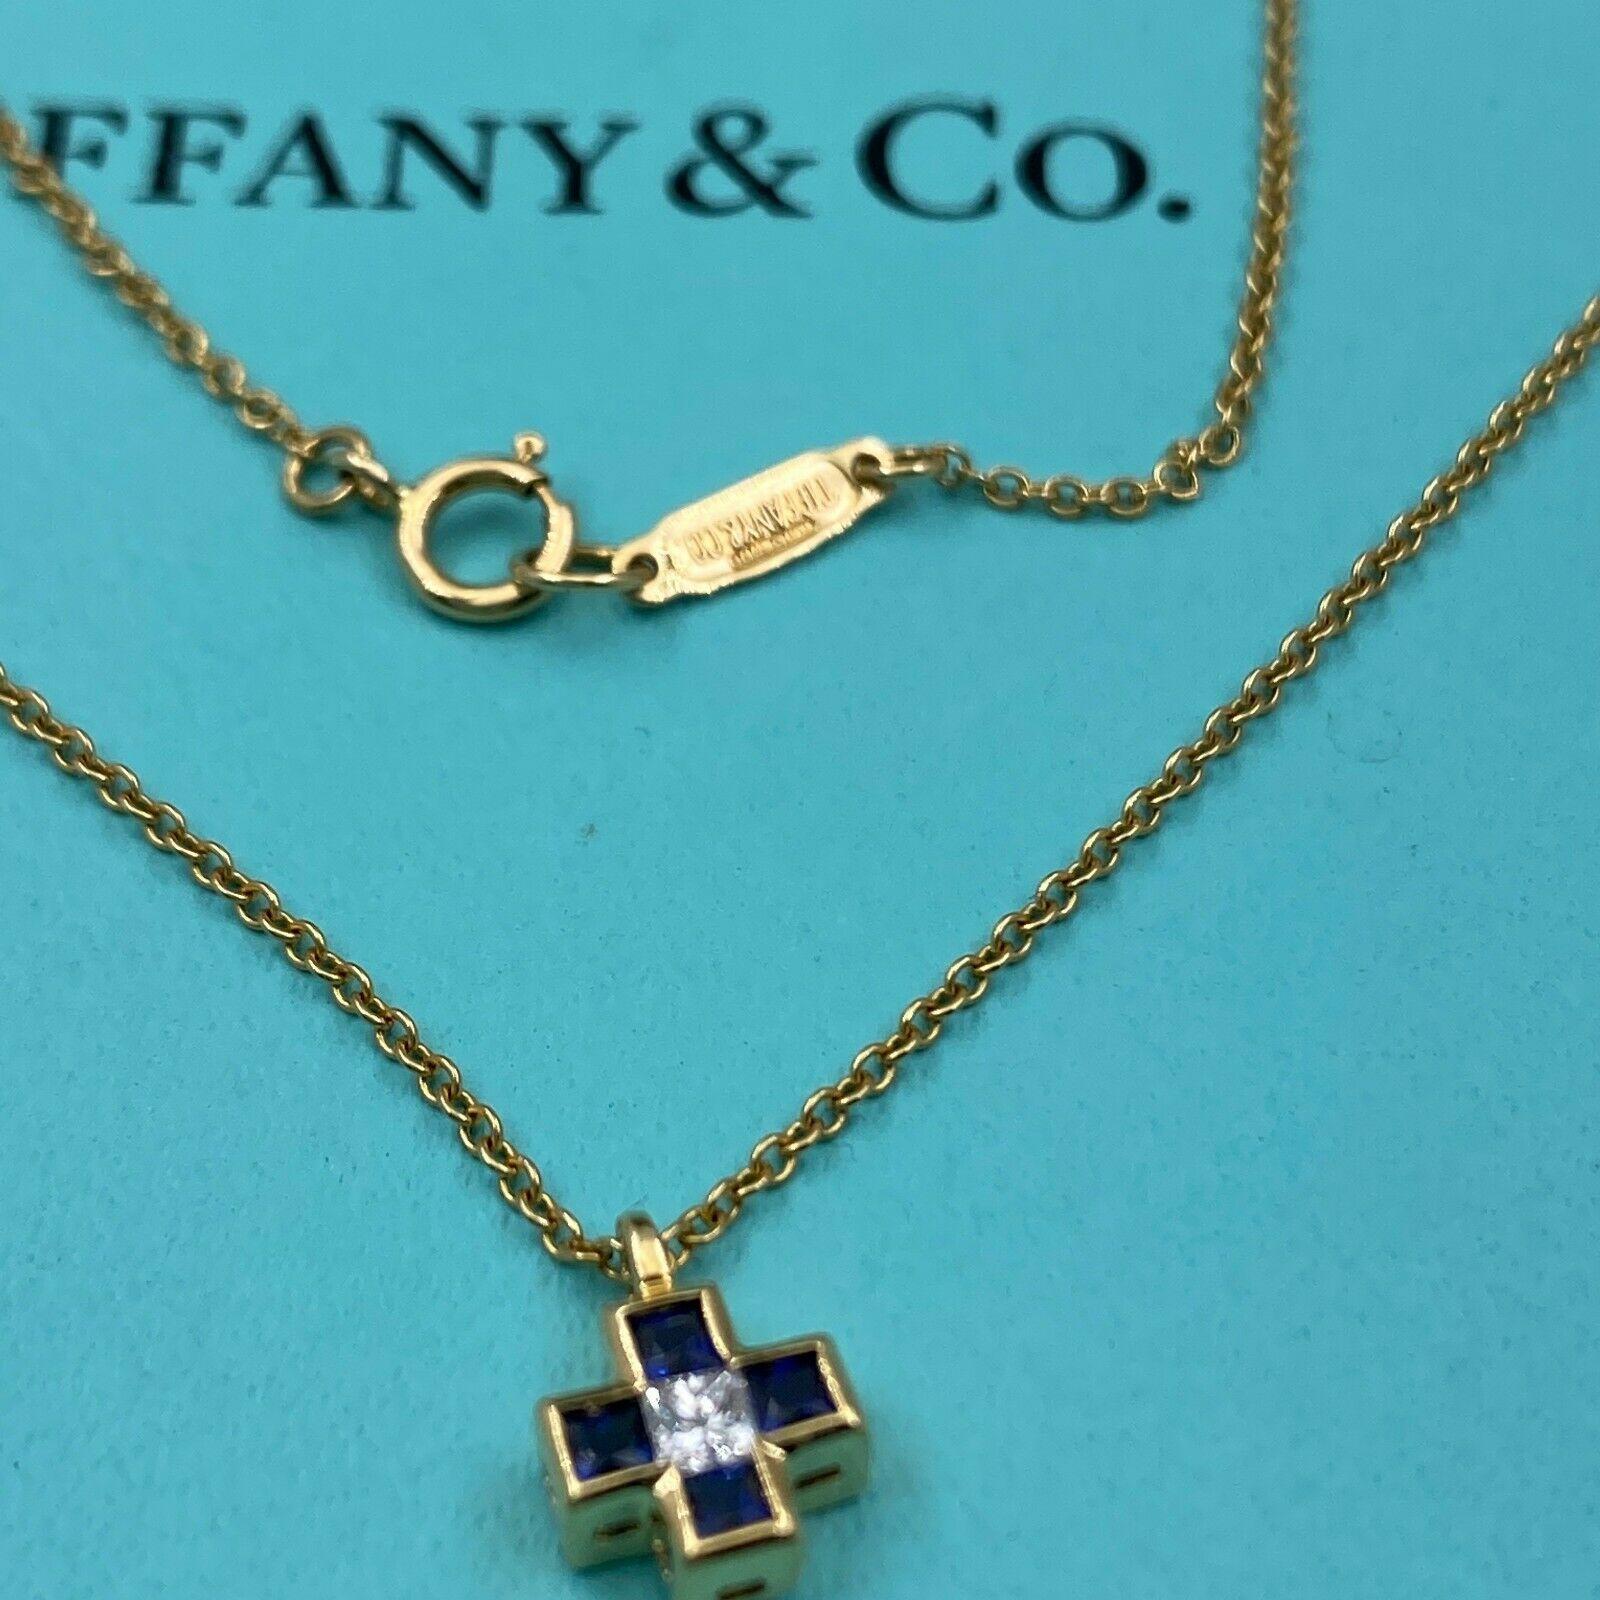 Tiffany & Co. Cross Pendant Necklace
Style:  Pendant Necklace
Metal:  18kt Yellow Gold
Size:  16 inches
Pendant:  9 MM
Main Diamond:  Princess Cut Diamond 0.08 pts
Gemstone:  4 Blue Square Cut Sapphires
Hallmark:  TIFFANY&CO.750 on Chain & T&Co.750